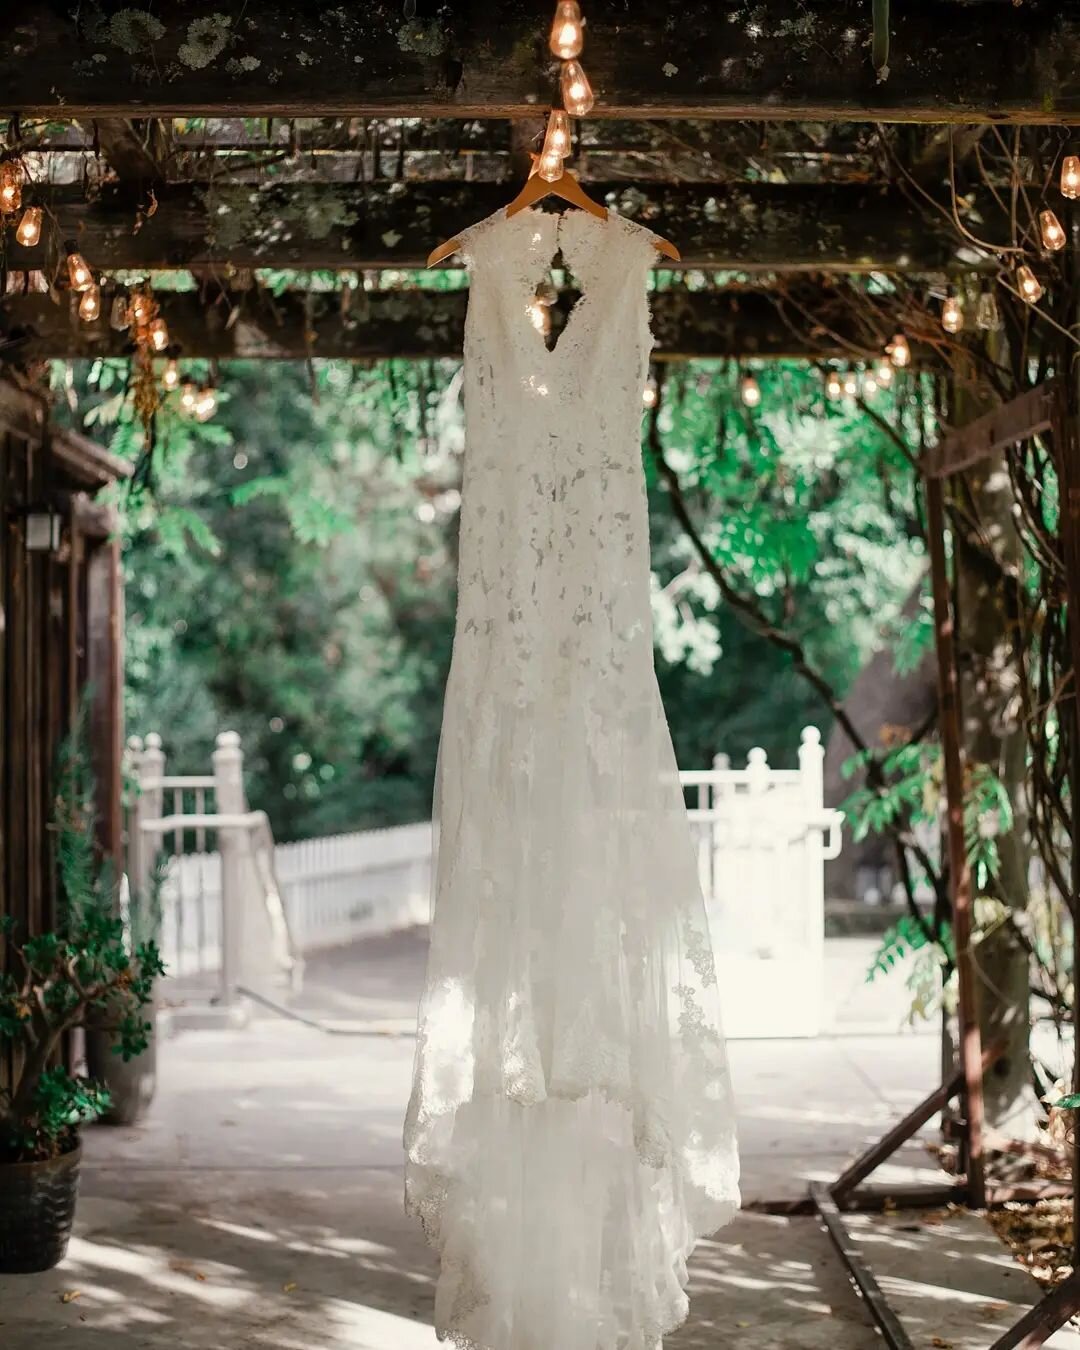 🌼 Gorgeous dress at @ardenwoodevents 

.

.

.

.

 
.

#weddingboutique #bridedetails #wedding_dress #bridedresses #bridesdress #weddingphotographyideas #whitefashion #weddingdresssale #bridalfashion2018 #bridalfashionmagazine #stylemeprettybride #